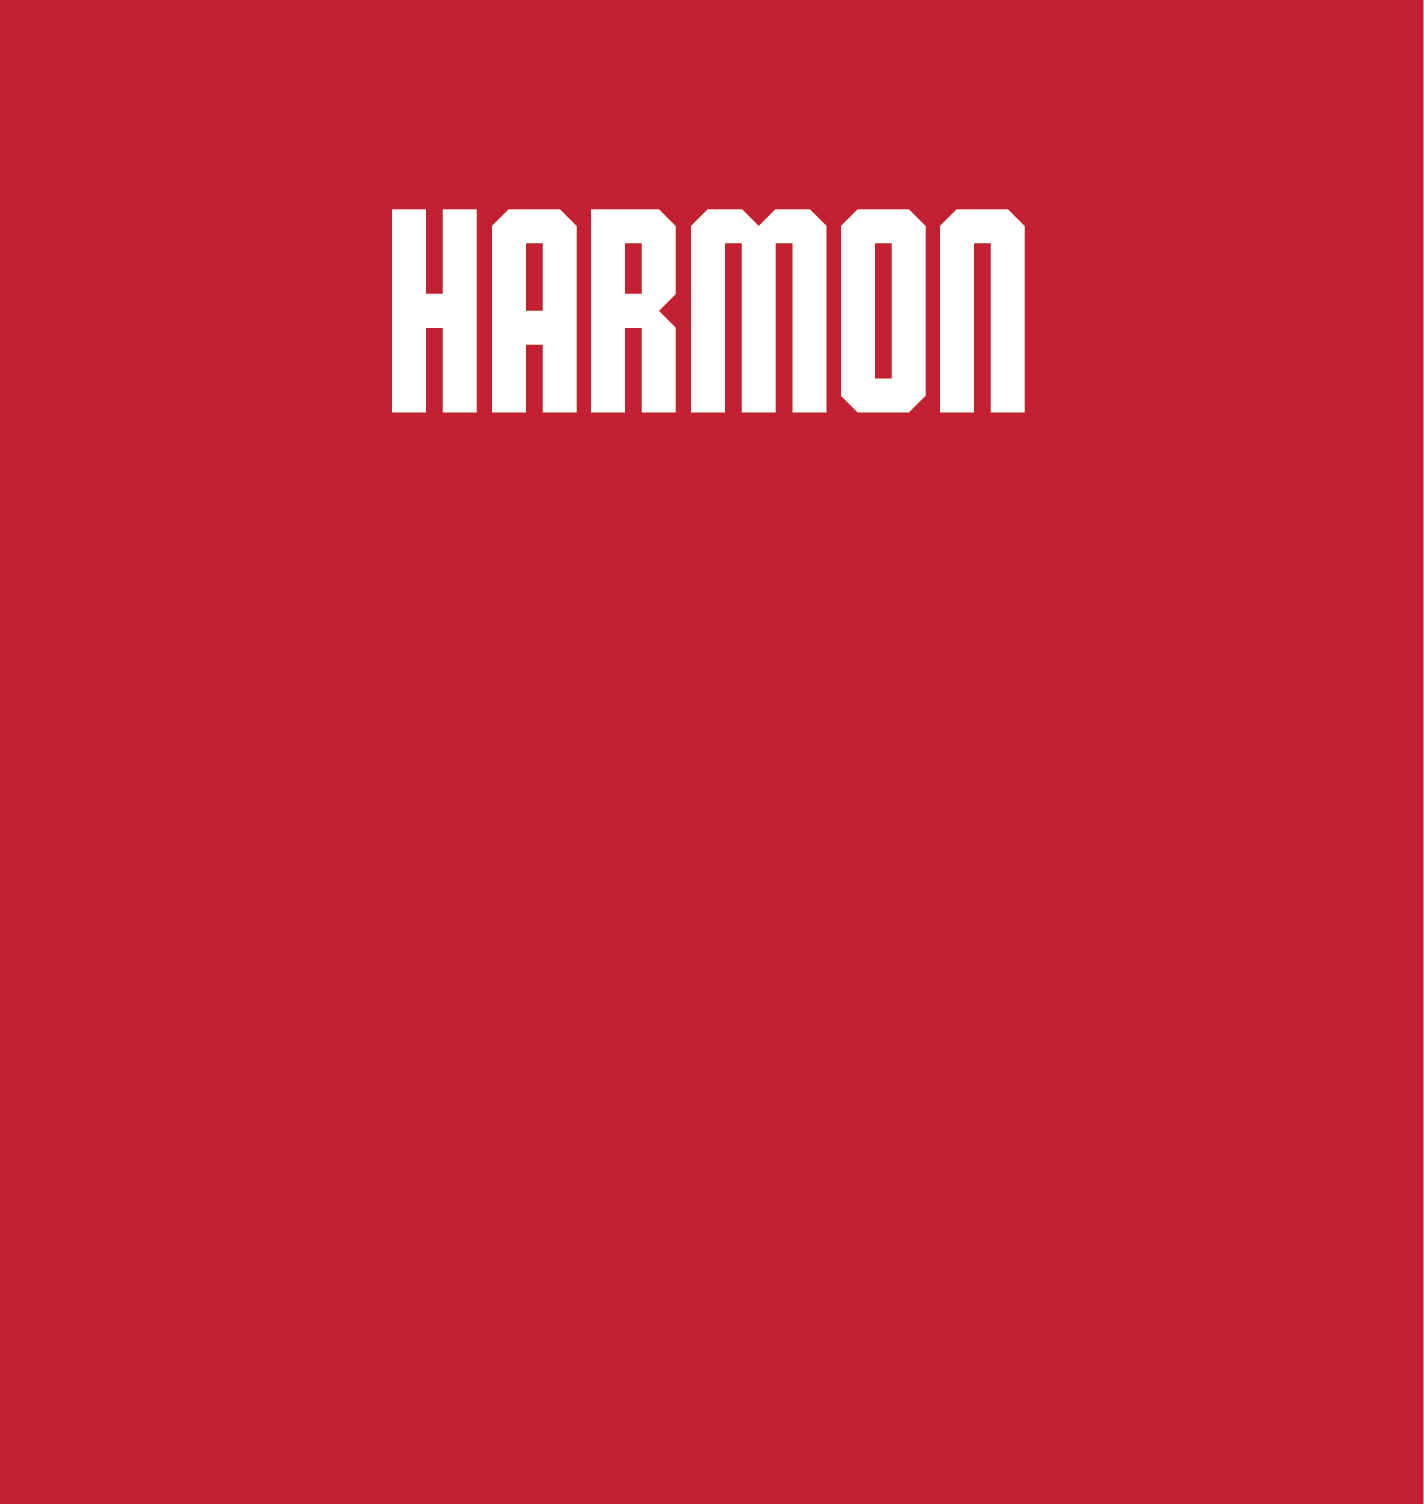 Jacob Harmon